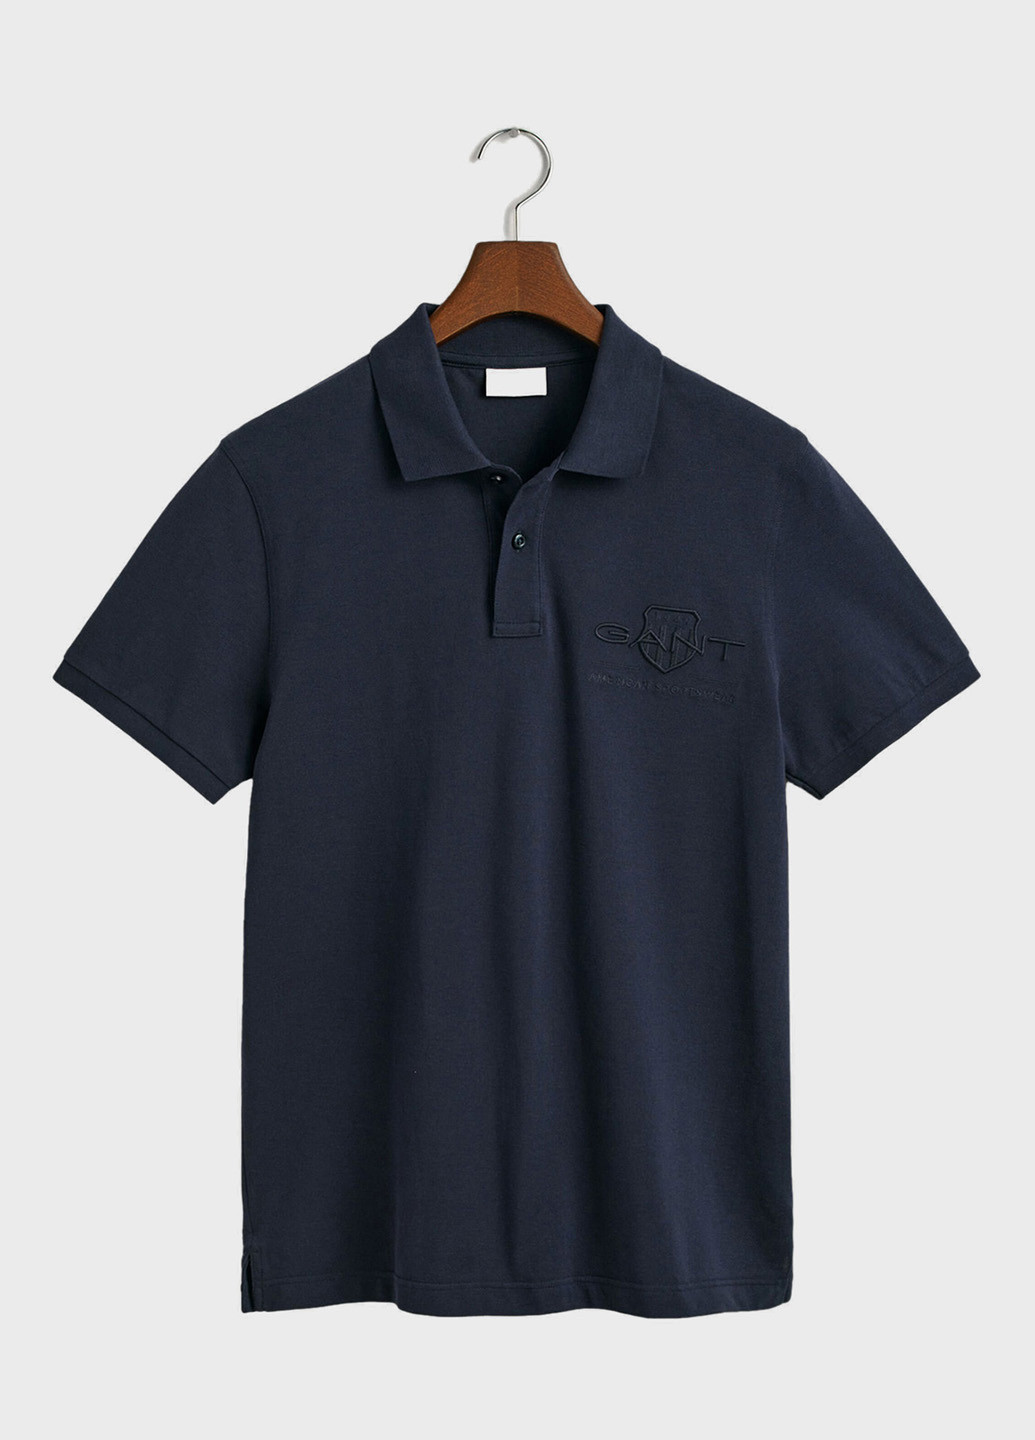 Синяя футболка-поло для мужчин Gant с логотипом